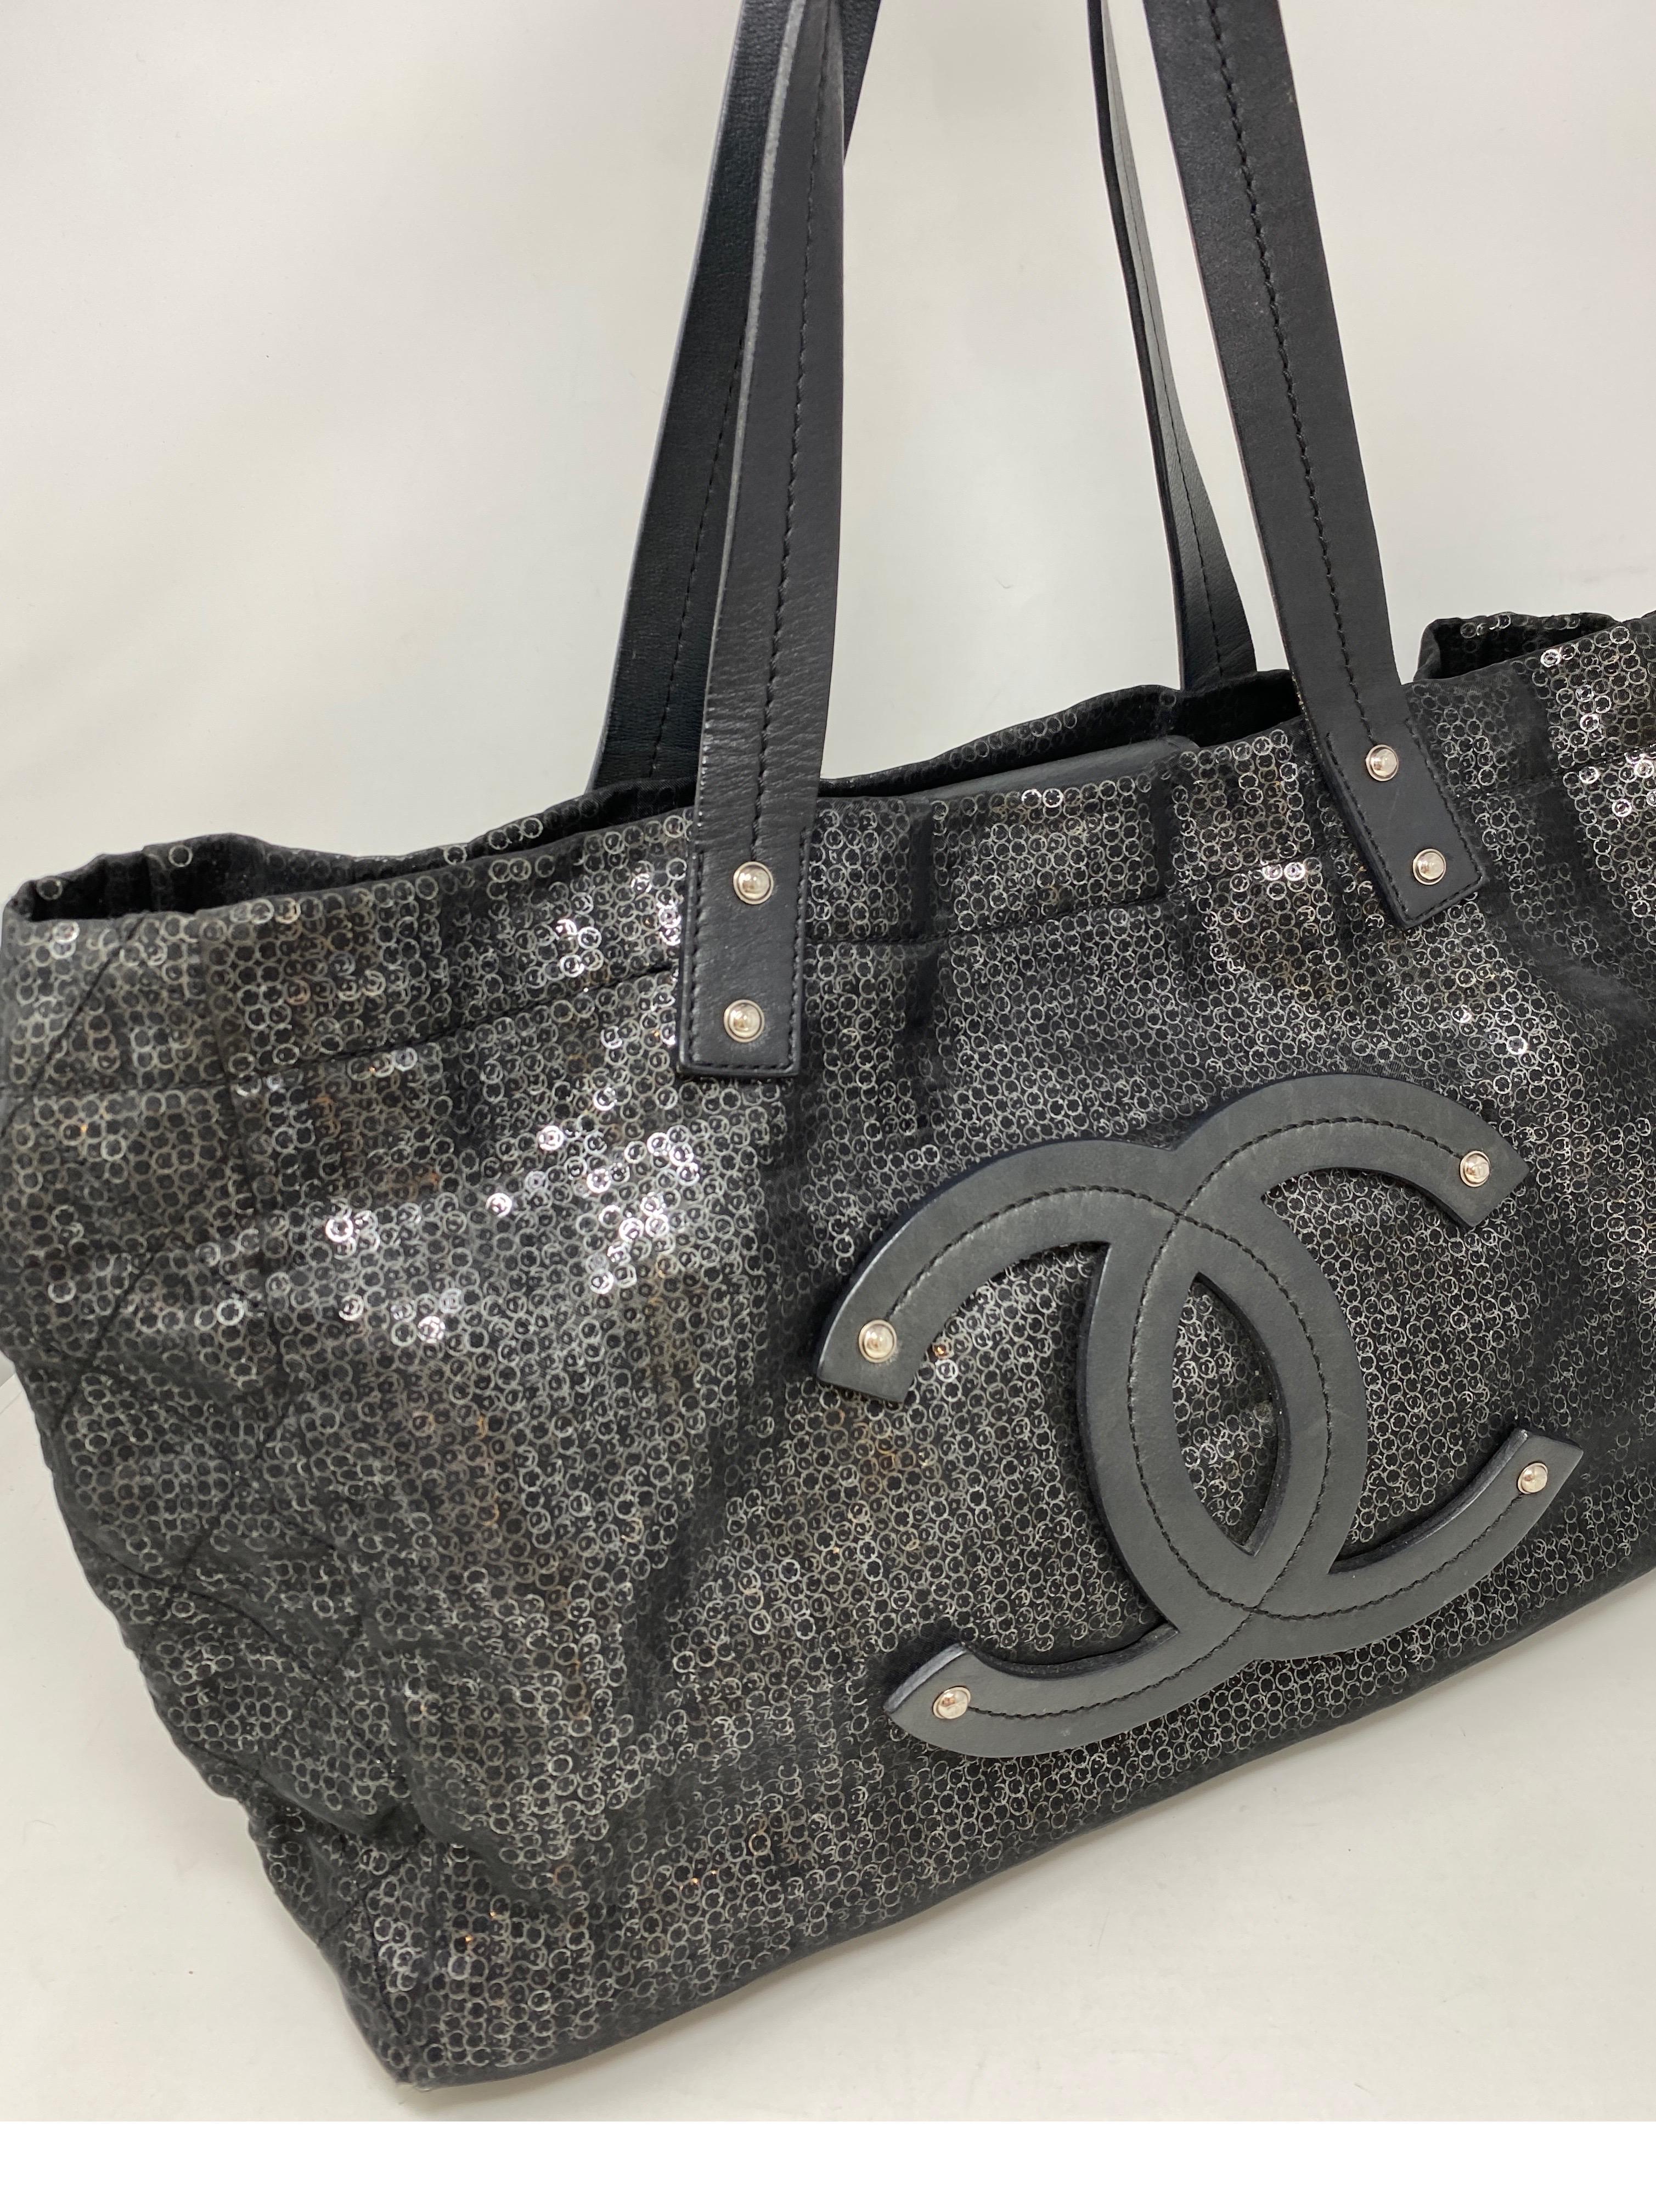 Women's or Men's Chanel Sequin Black Tote Bag 